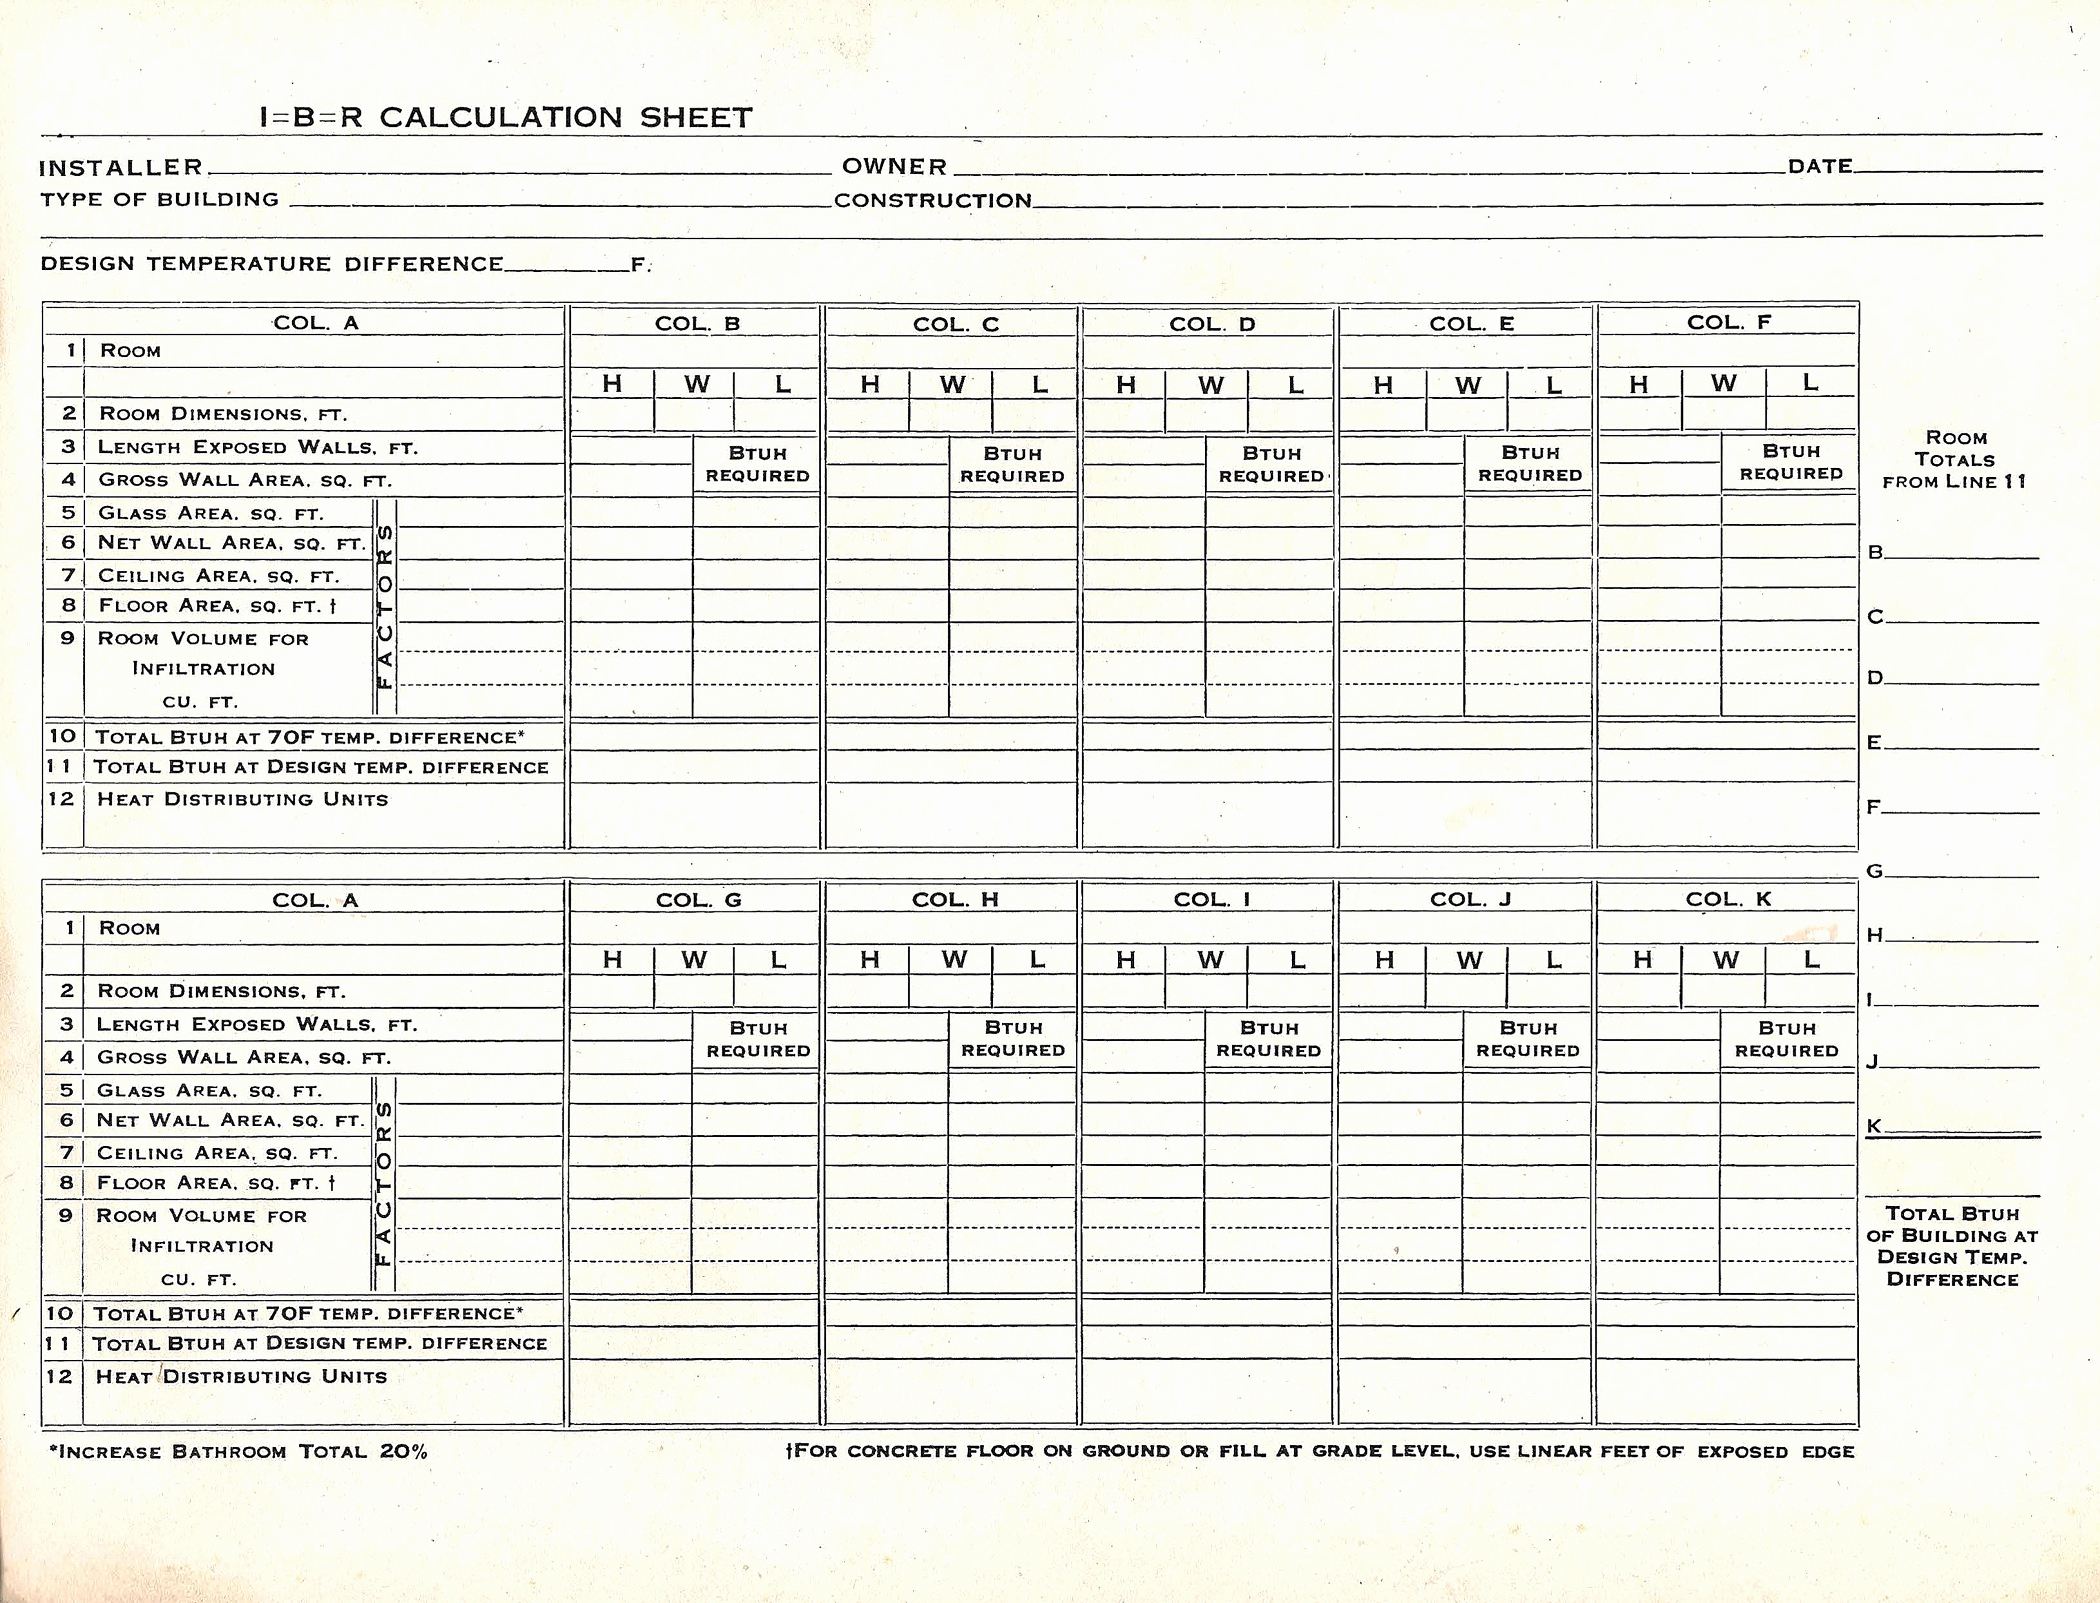 Manual J Load Calculation Spreadsheet For Example Of Hvac Load Calculationeadsheet Manual J For Beautiful